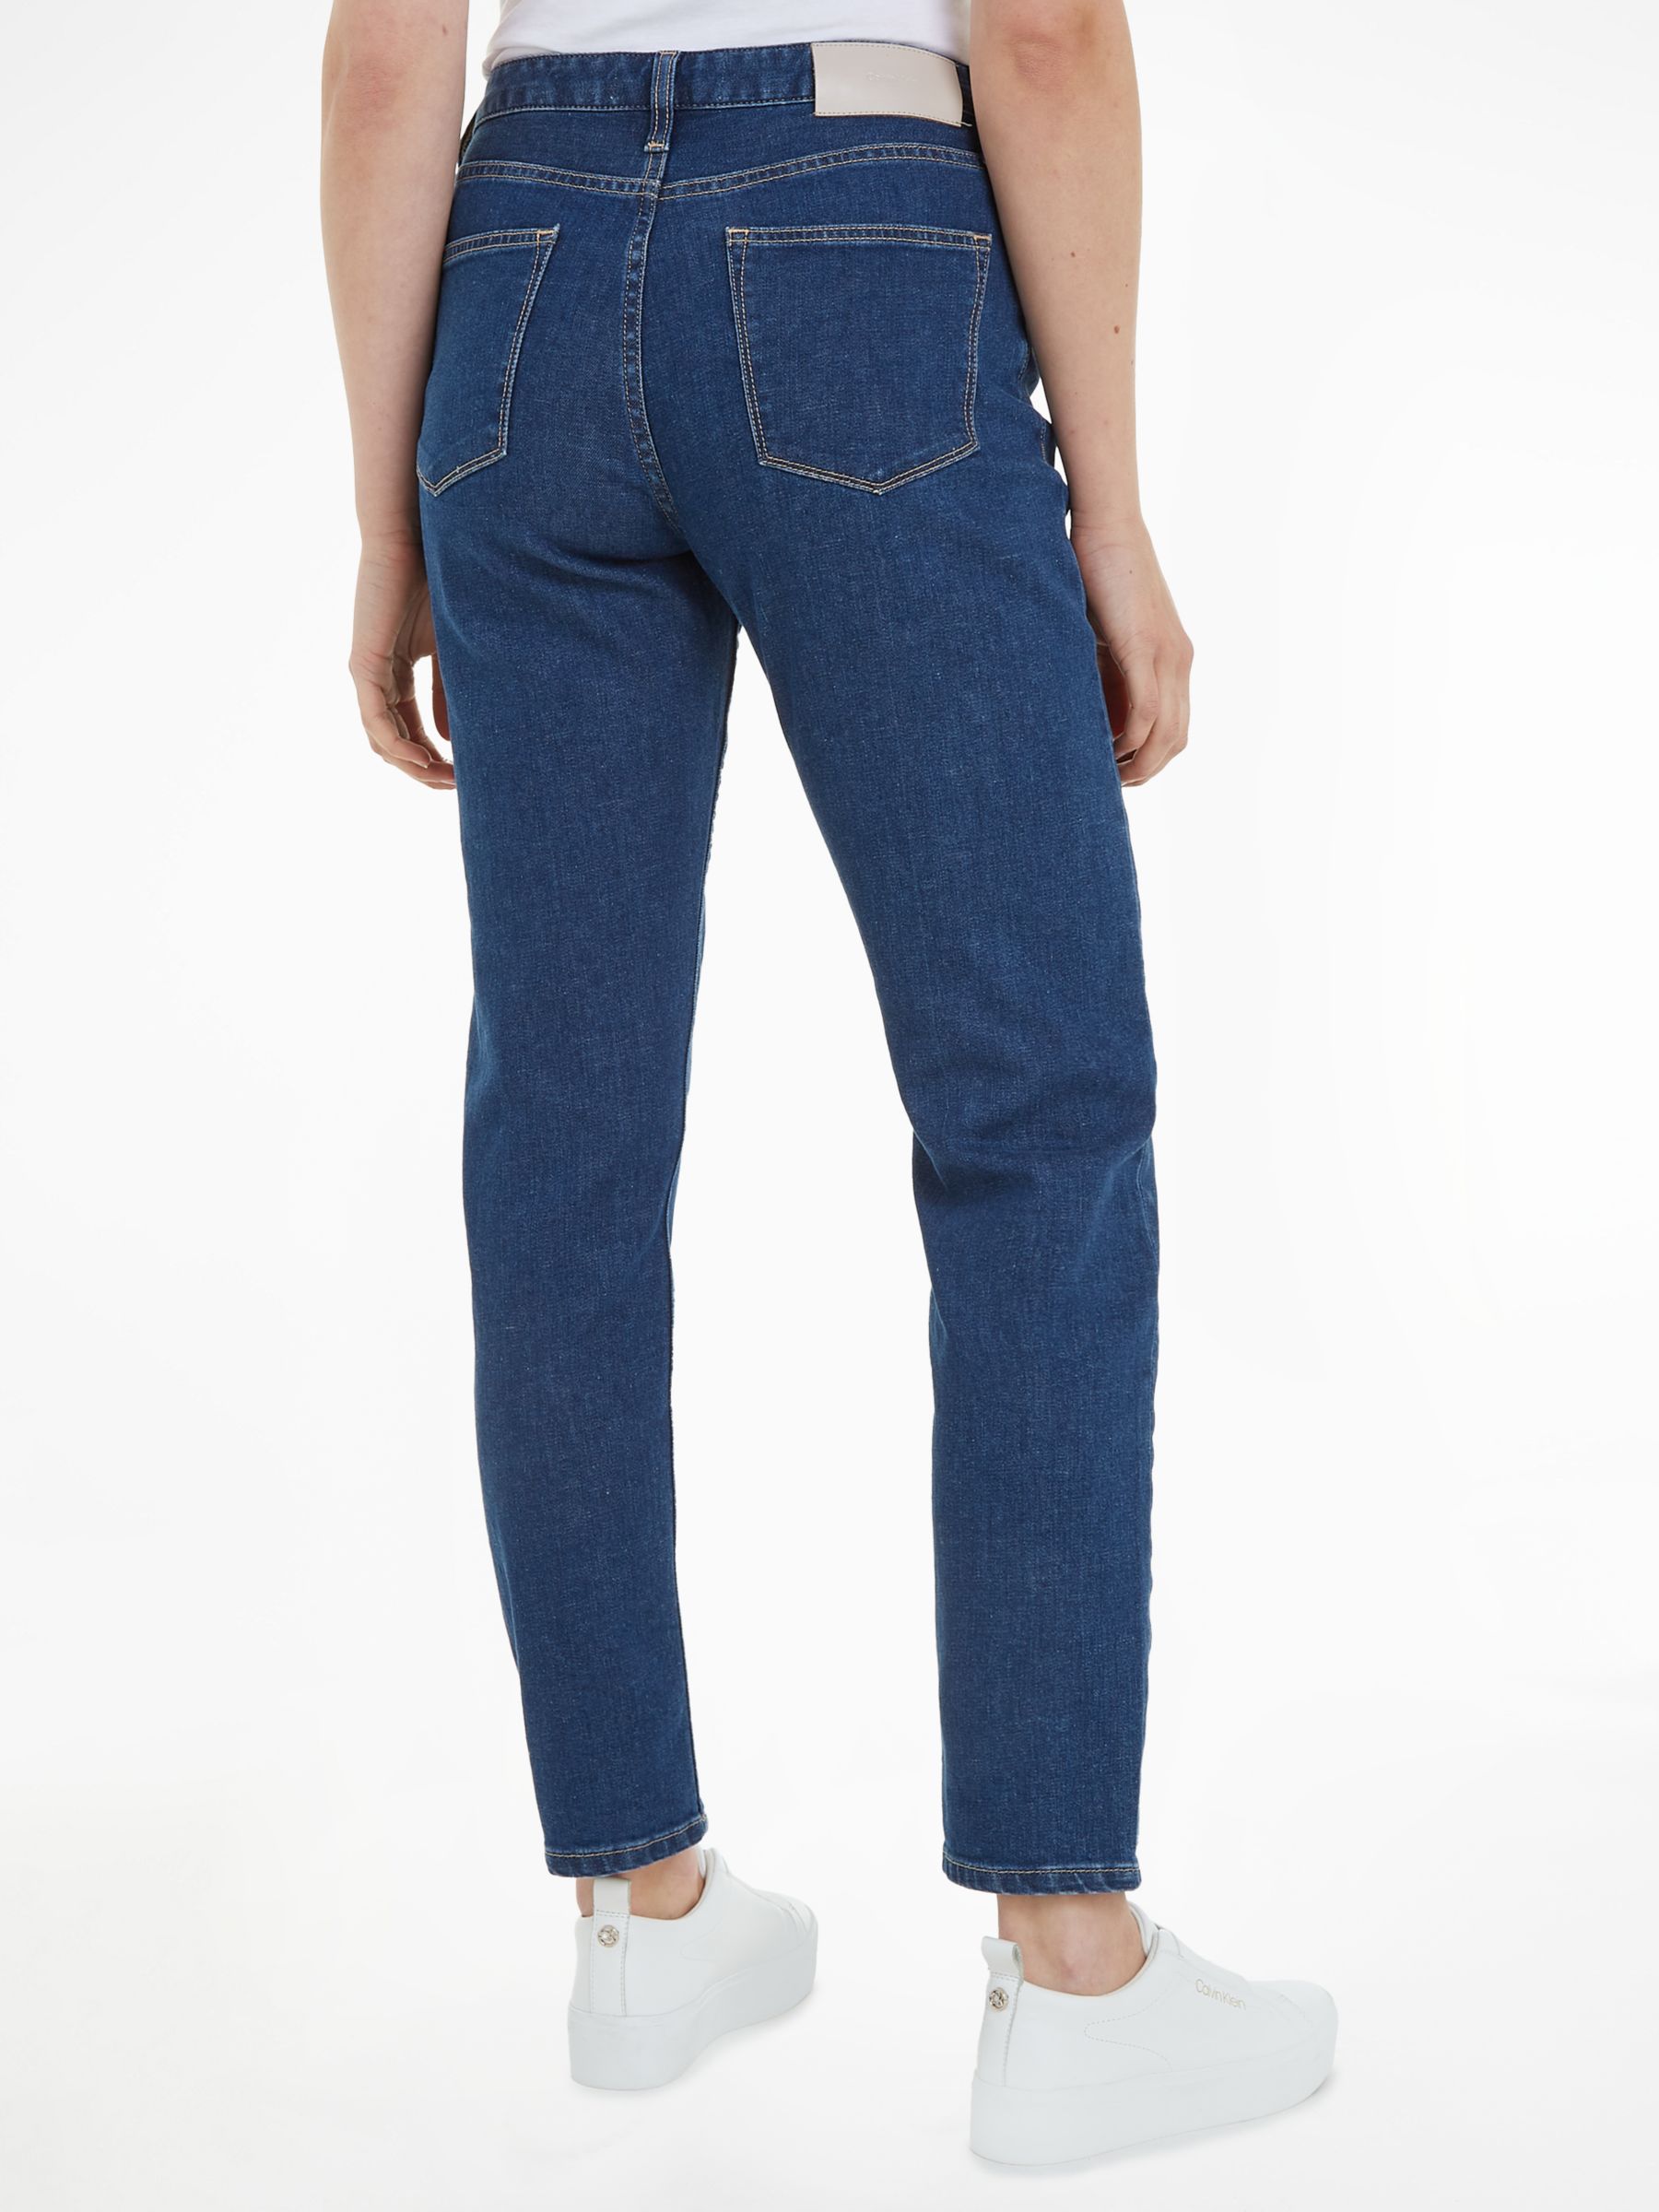 Calvin Klein Mid Rise Slim Fit Organic Cotton Blend Jeans, Blue, 25R